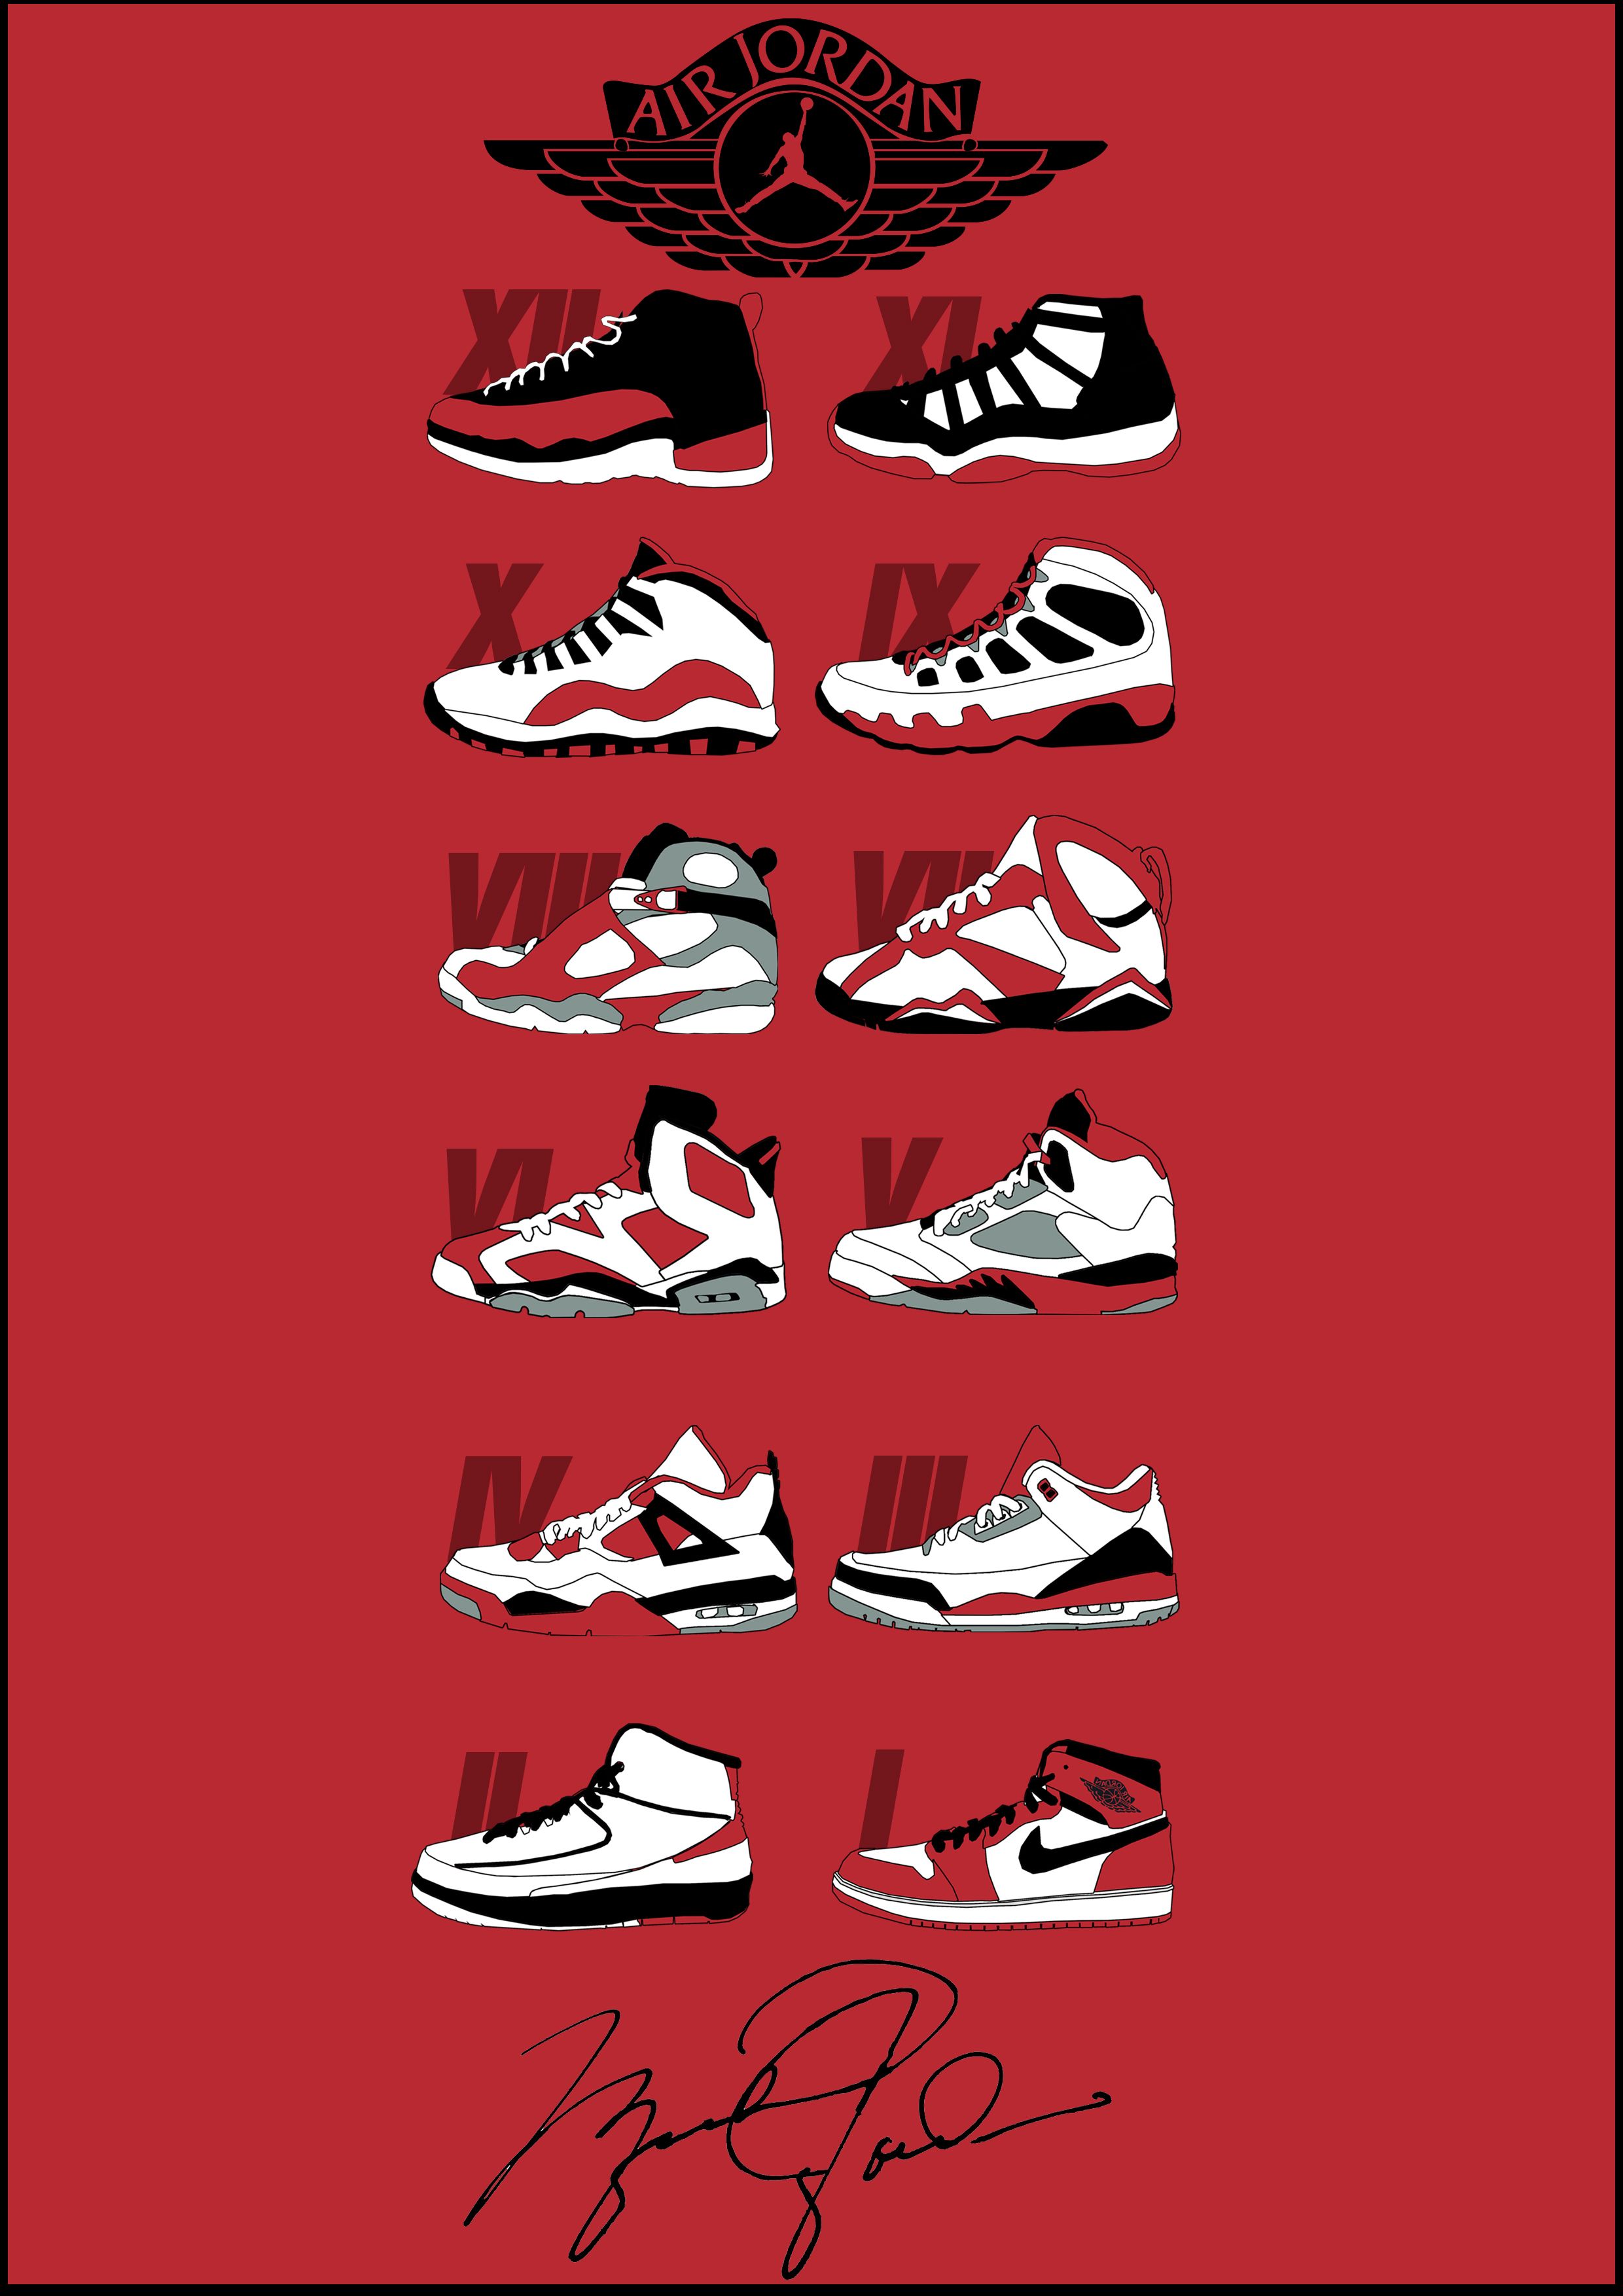 Free download jordan shoes wallpaper wallpaper next nike jordan Car  Pictures 1440x900 for your Desktop Mobile  Tablet  Explore 76 Jordan  Shoes Wallpaper  Nike Shoes Wallpapers Air Jordan Shoes Wallpaper